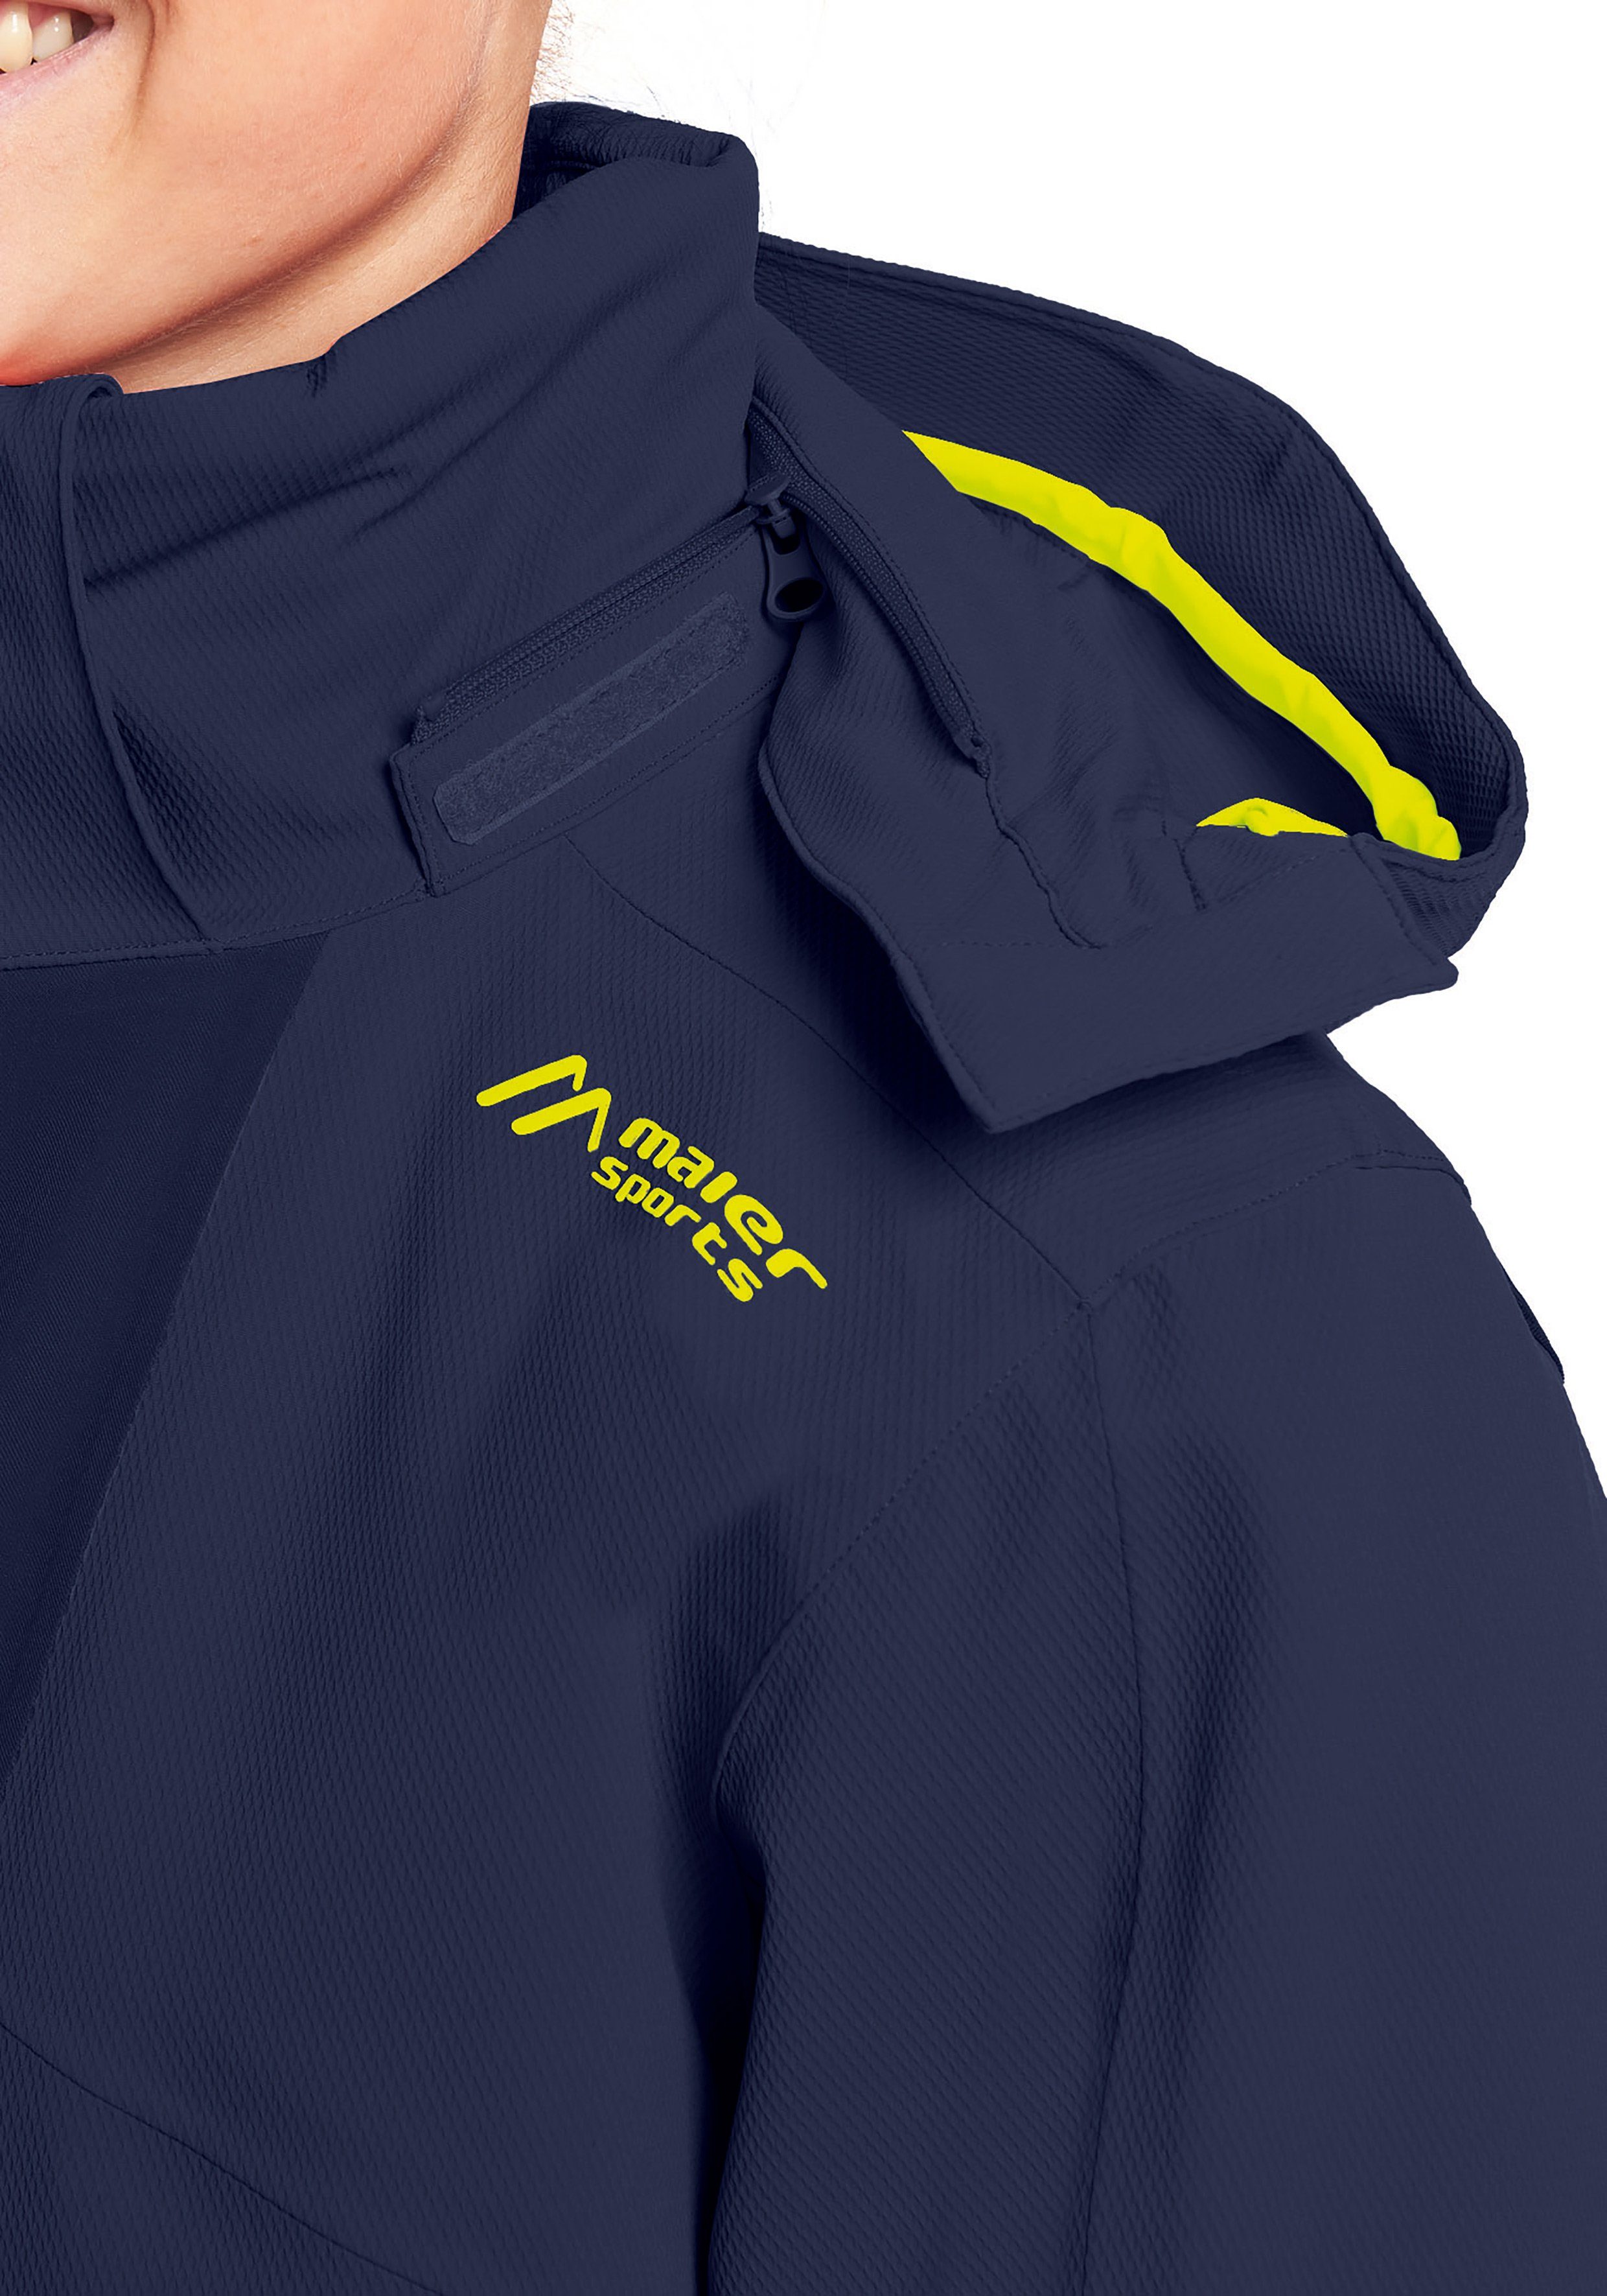 Maier Sports Skijacke Impulse dunkelblau – perfekt und W Piste Skijacke Modern Freeride Fast designte für